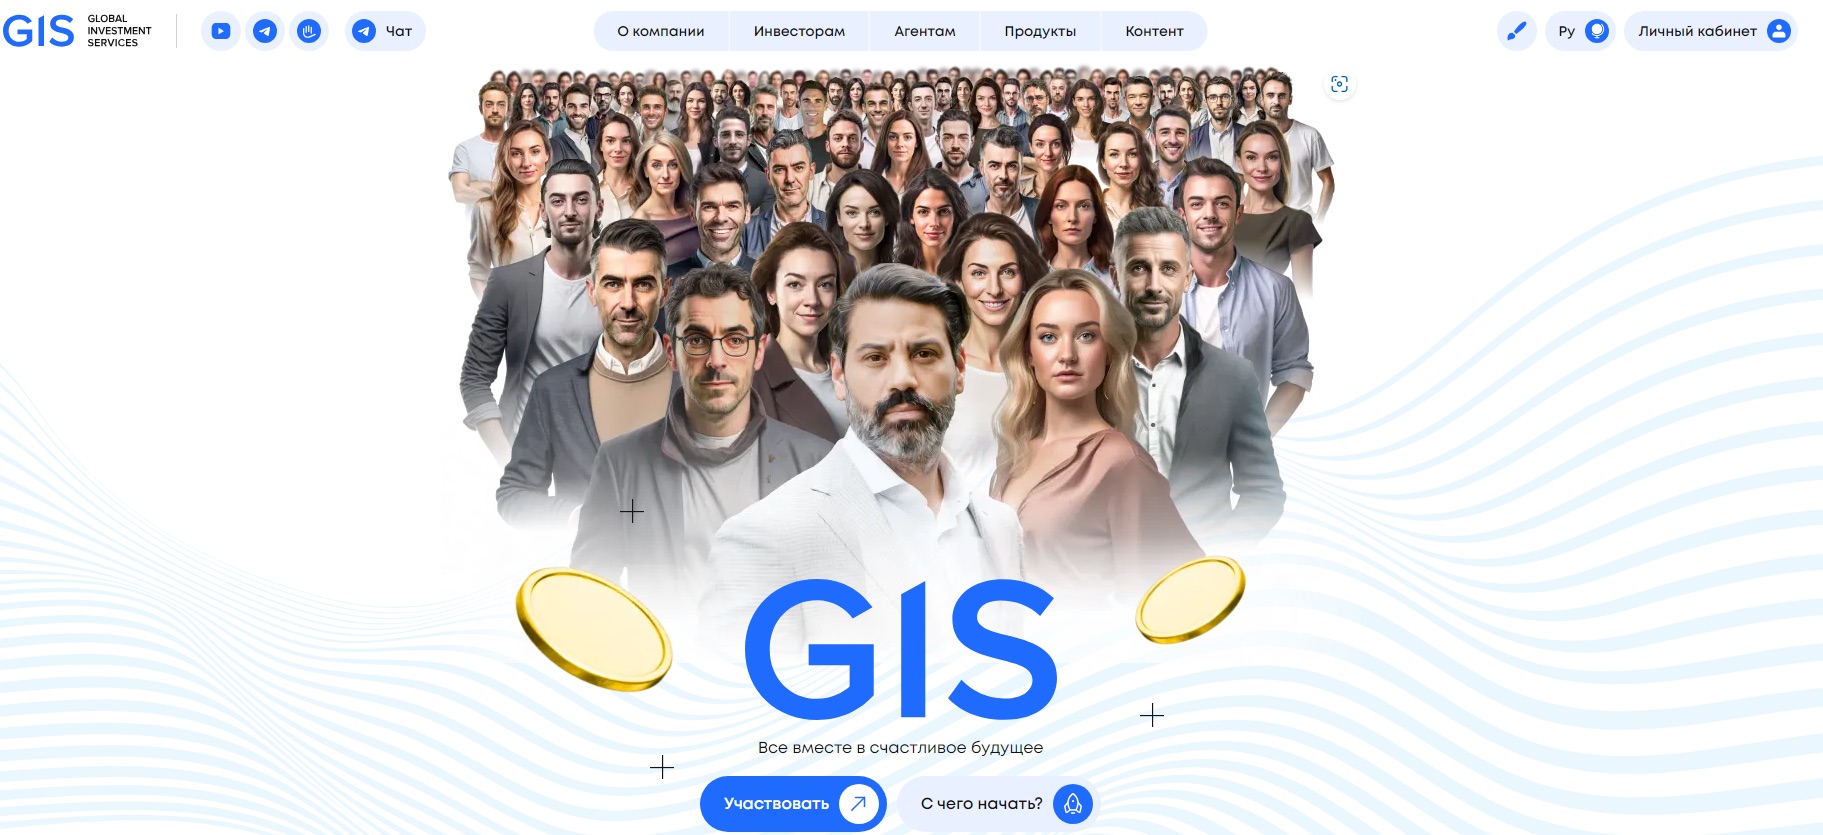 GIS - сайт